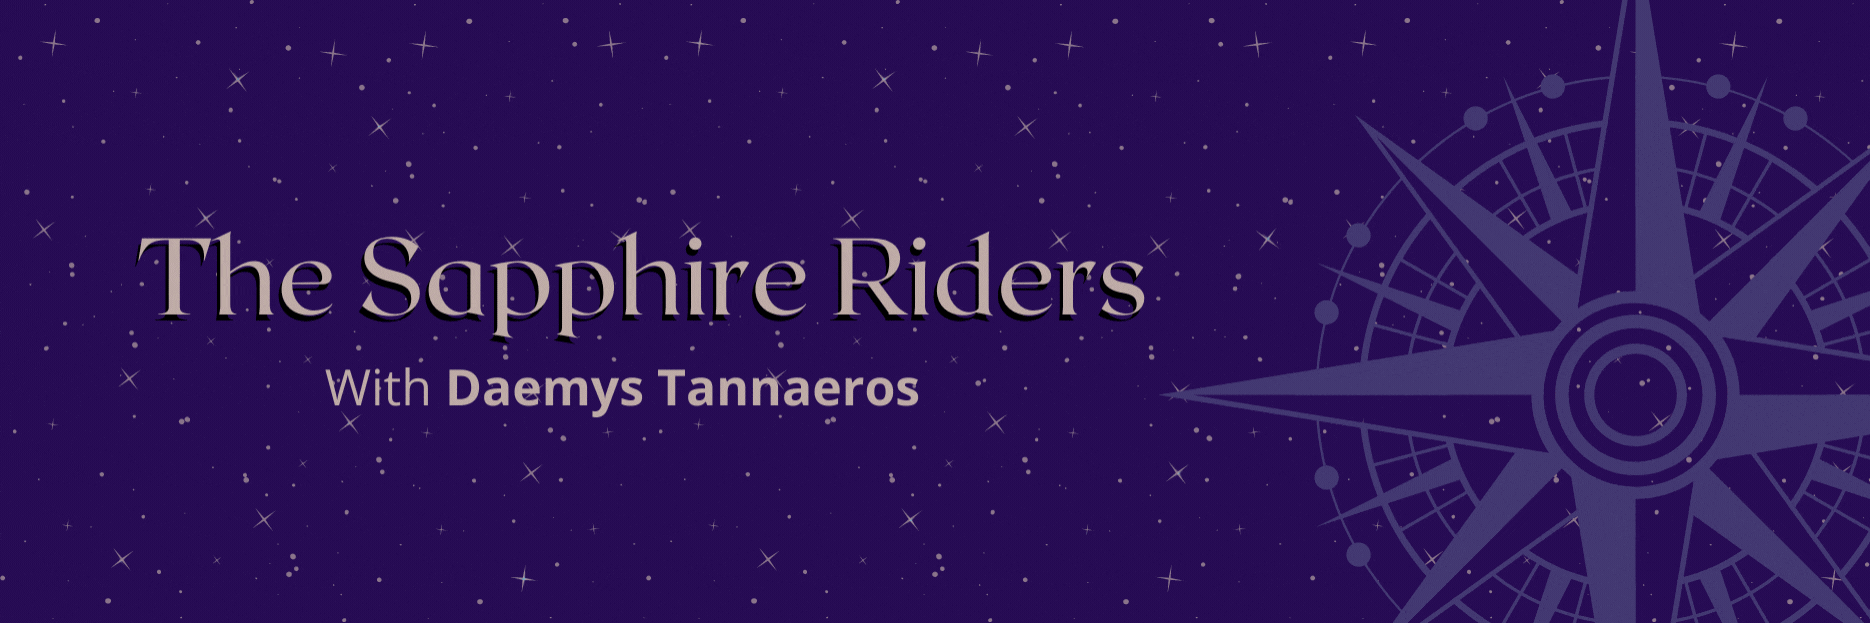 The Sapphire Riders #7